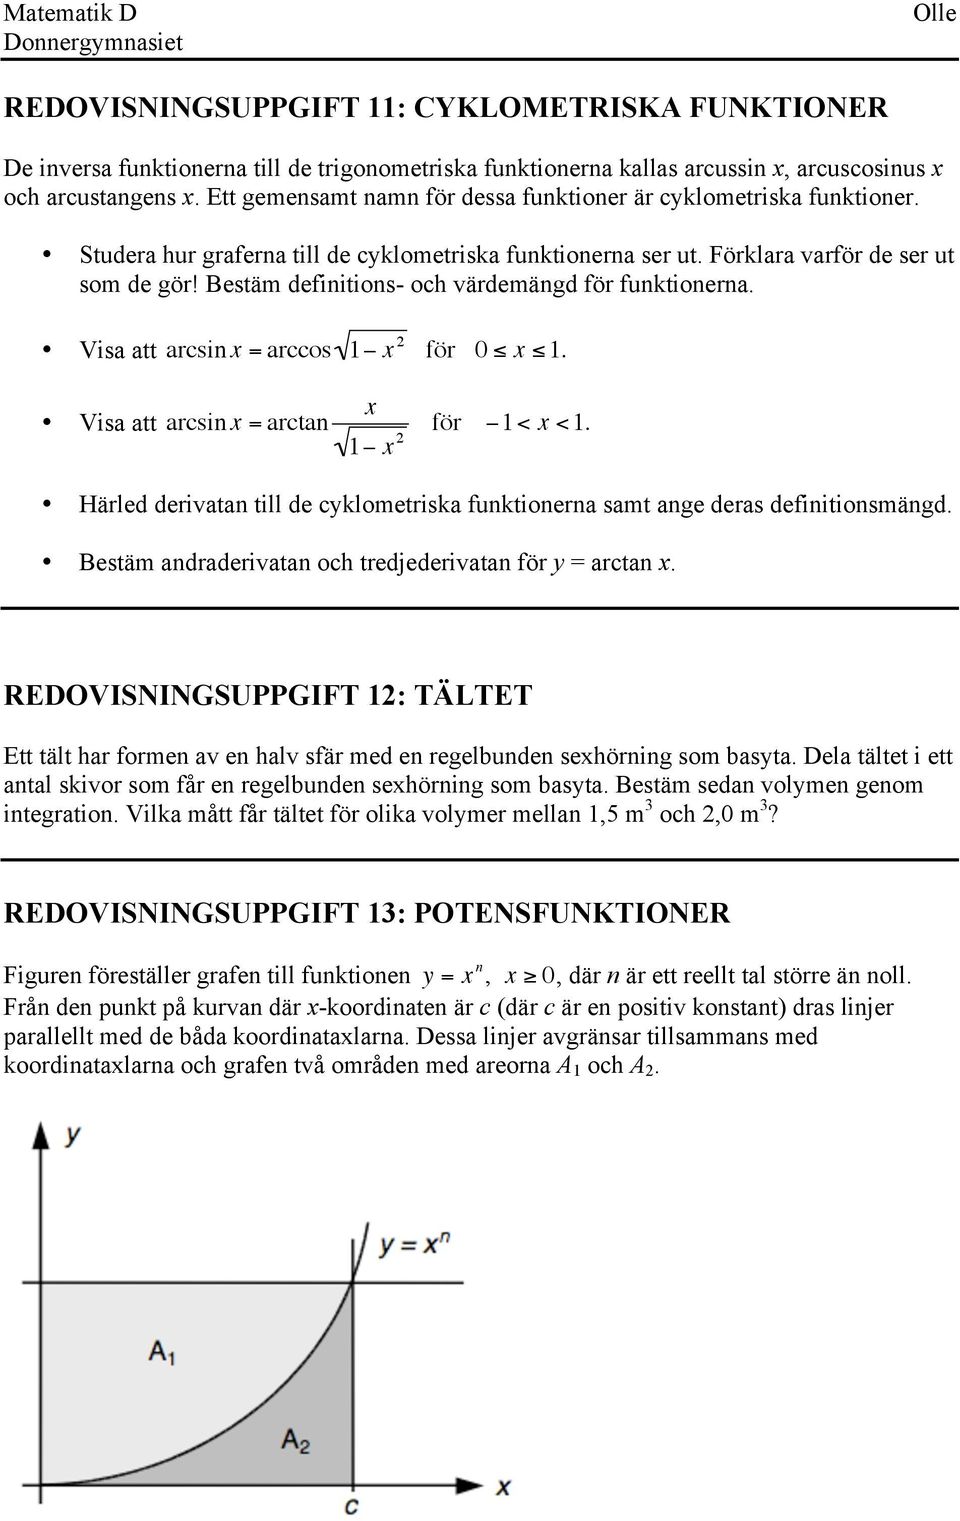 REDOVISNINGSUPPGIFTER - PDF Free Download